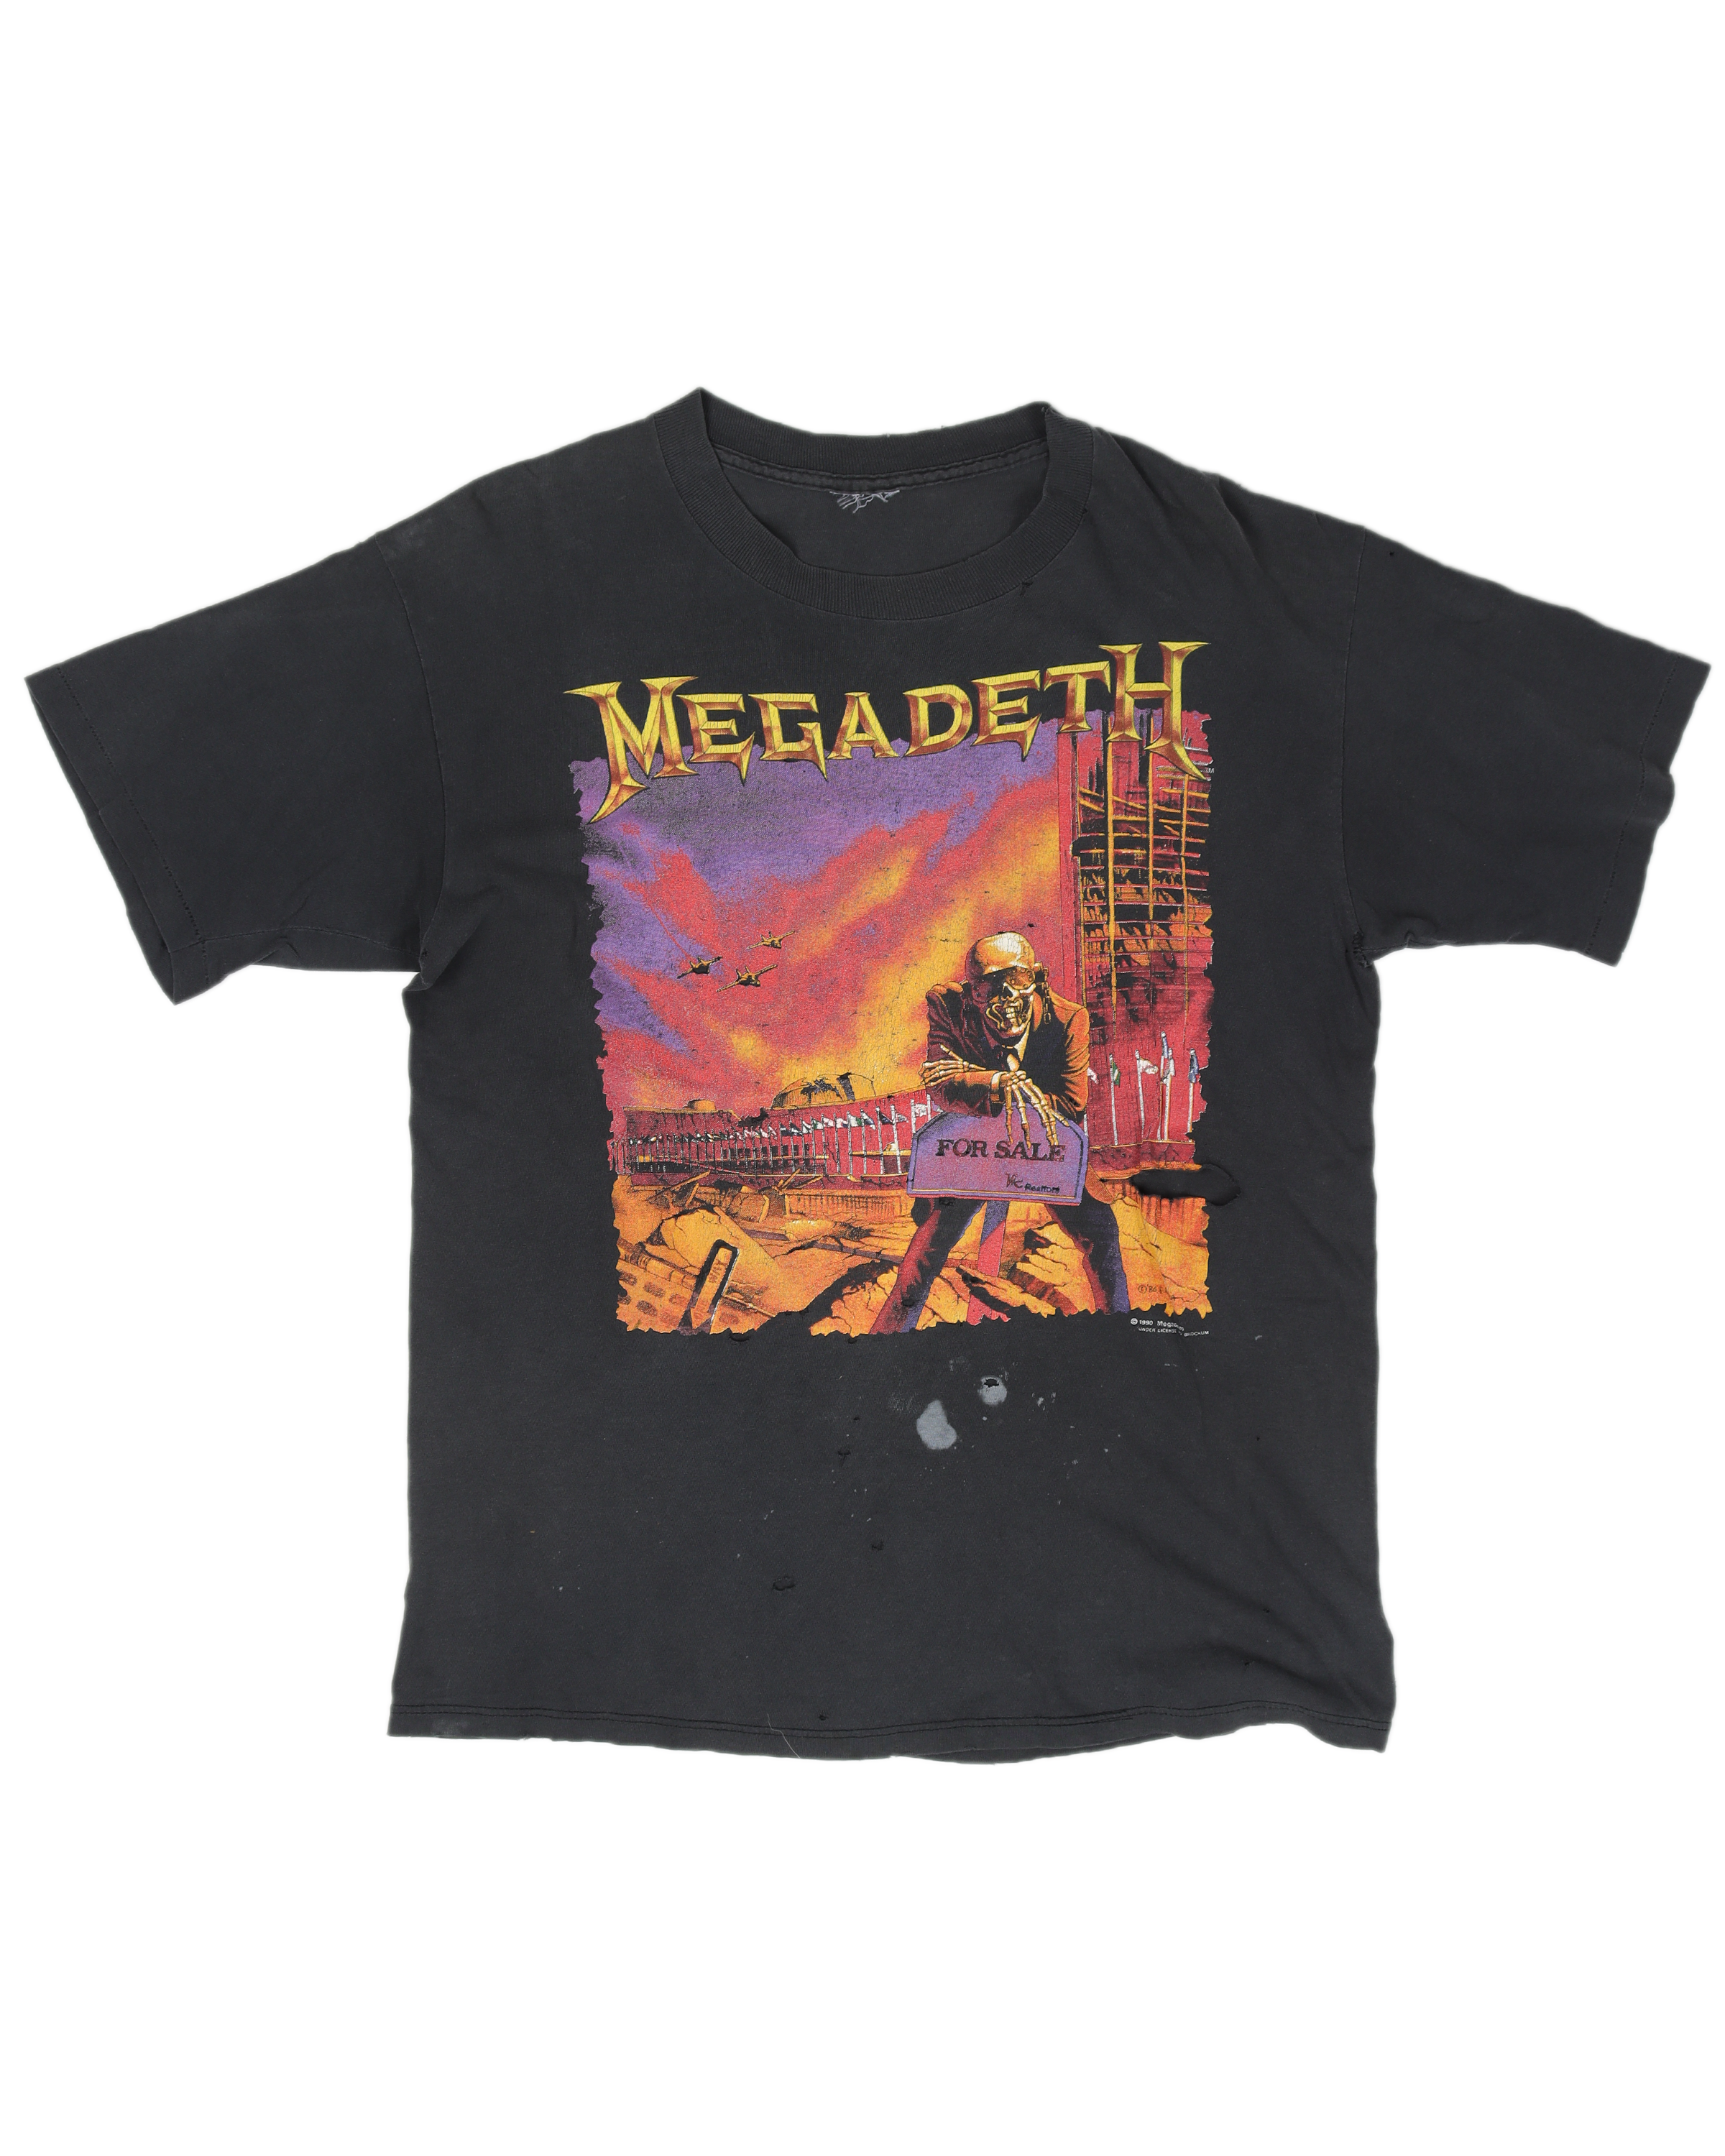 Megadeth 'Peace Sells' T-Shirt